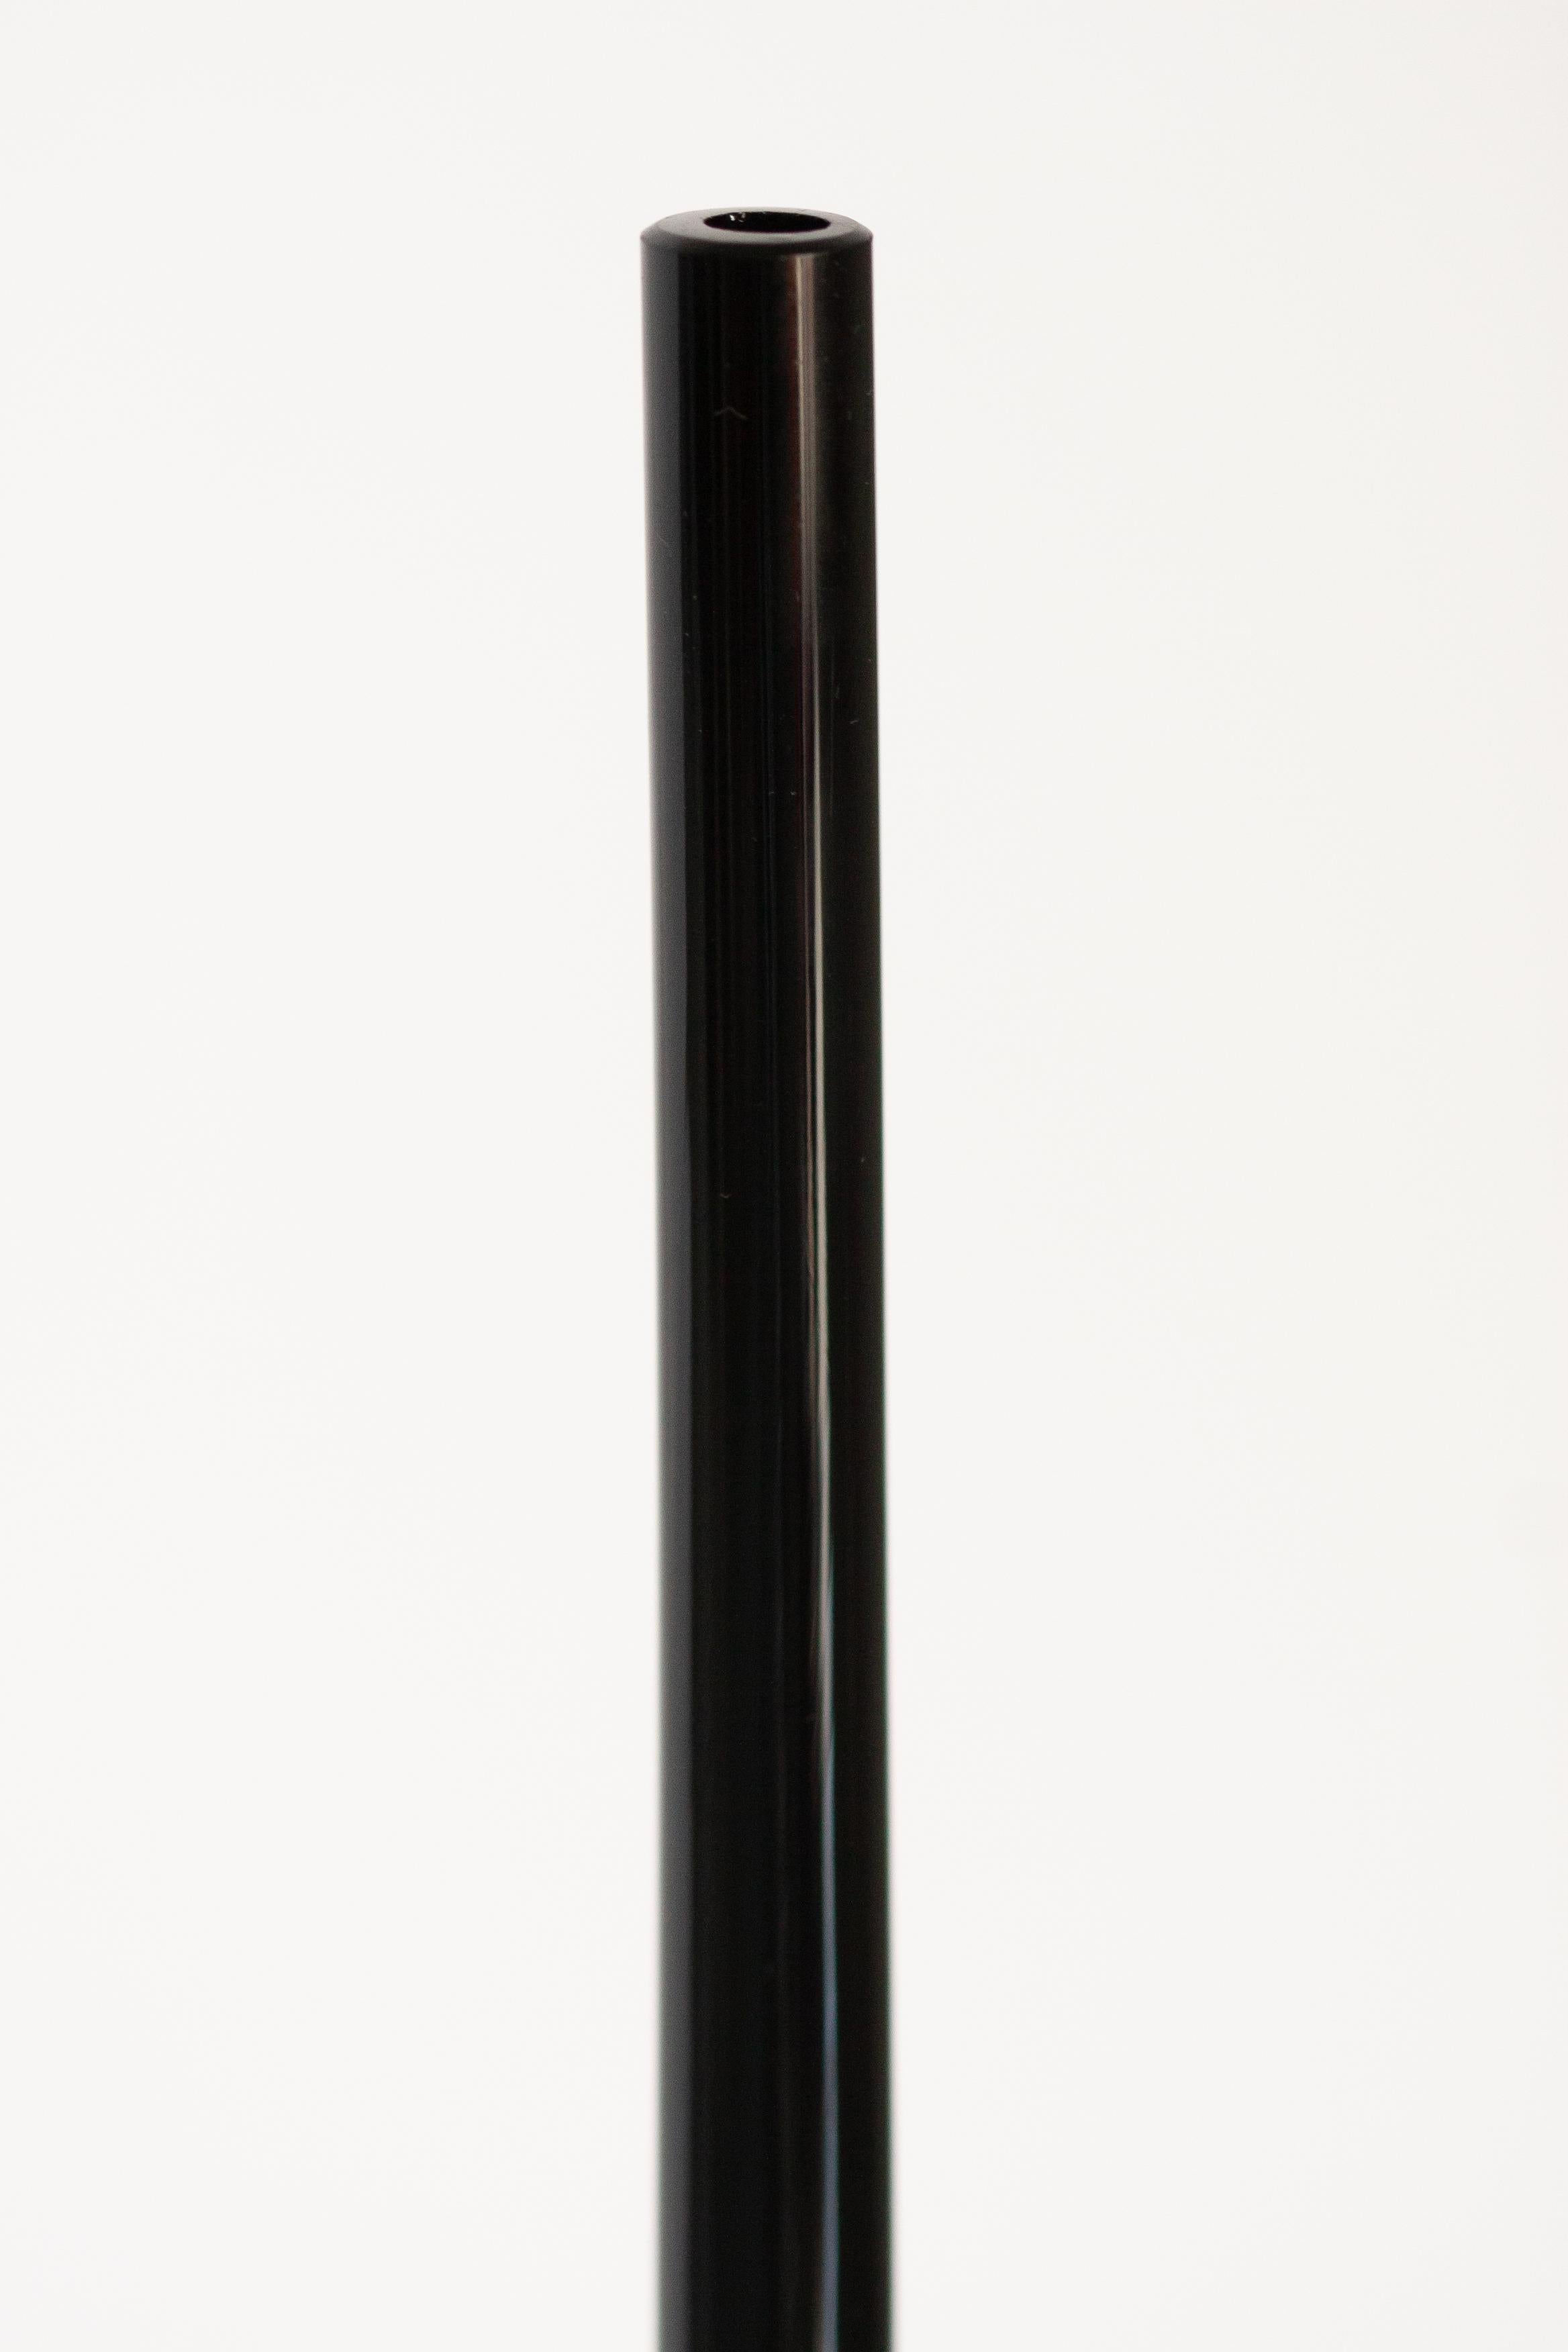 Mid Century Vintage Slim Black Decorative Glass Vase, Europe, 1960s For Sale 4